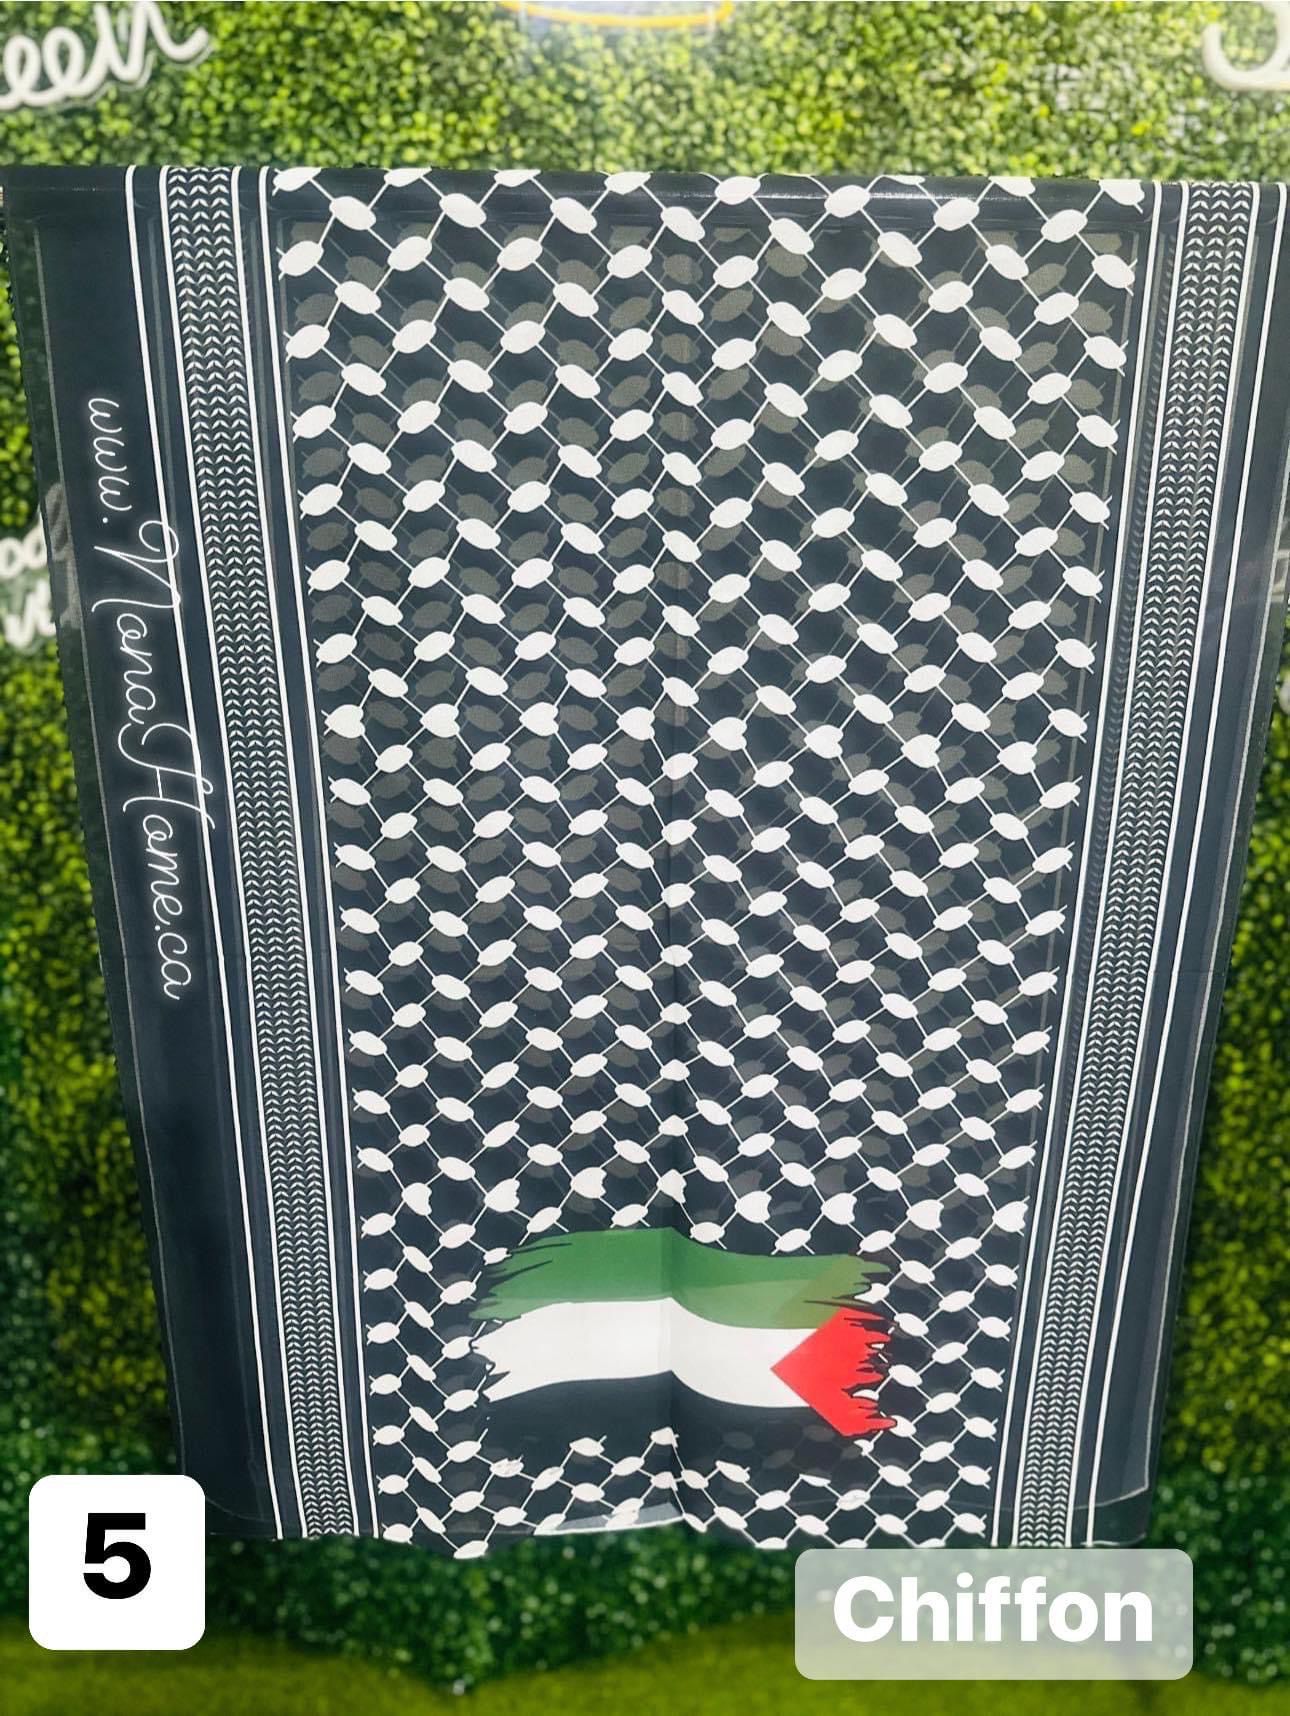 Palestine Scarves